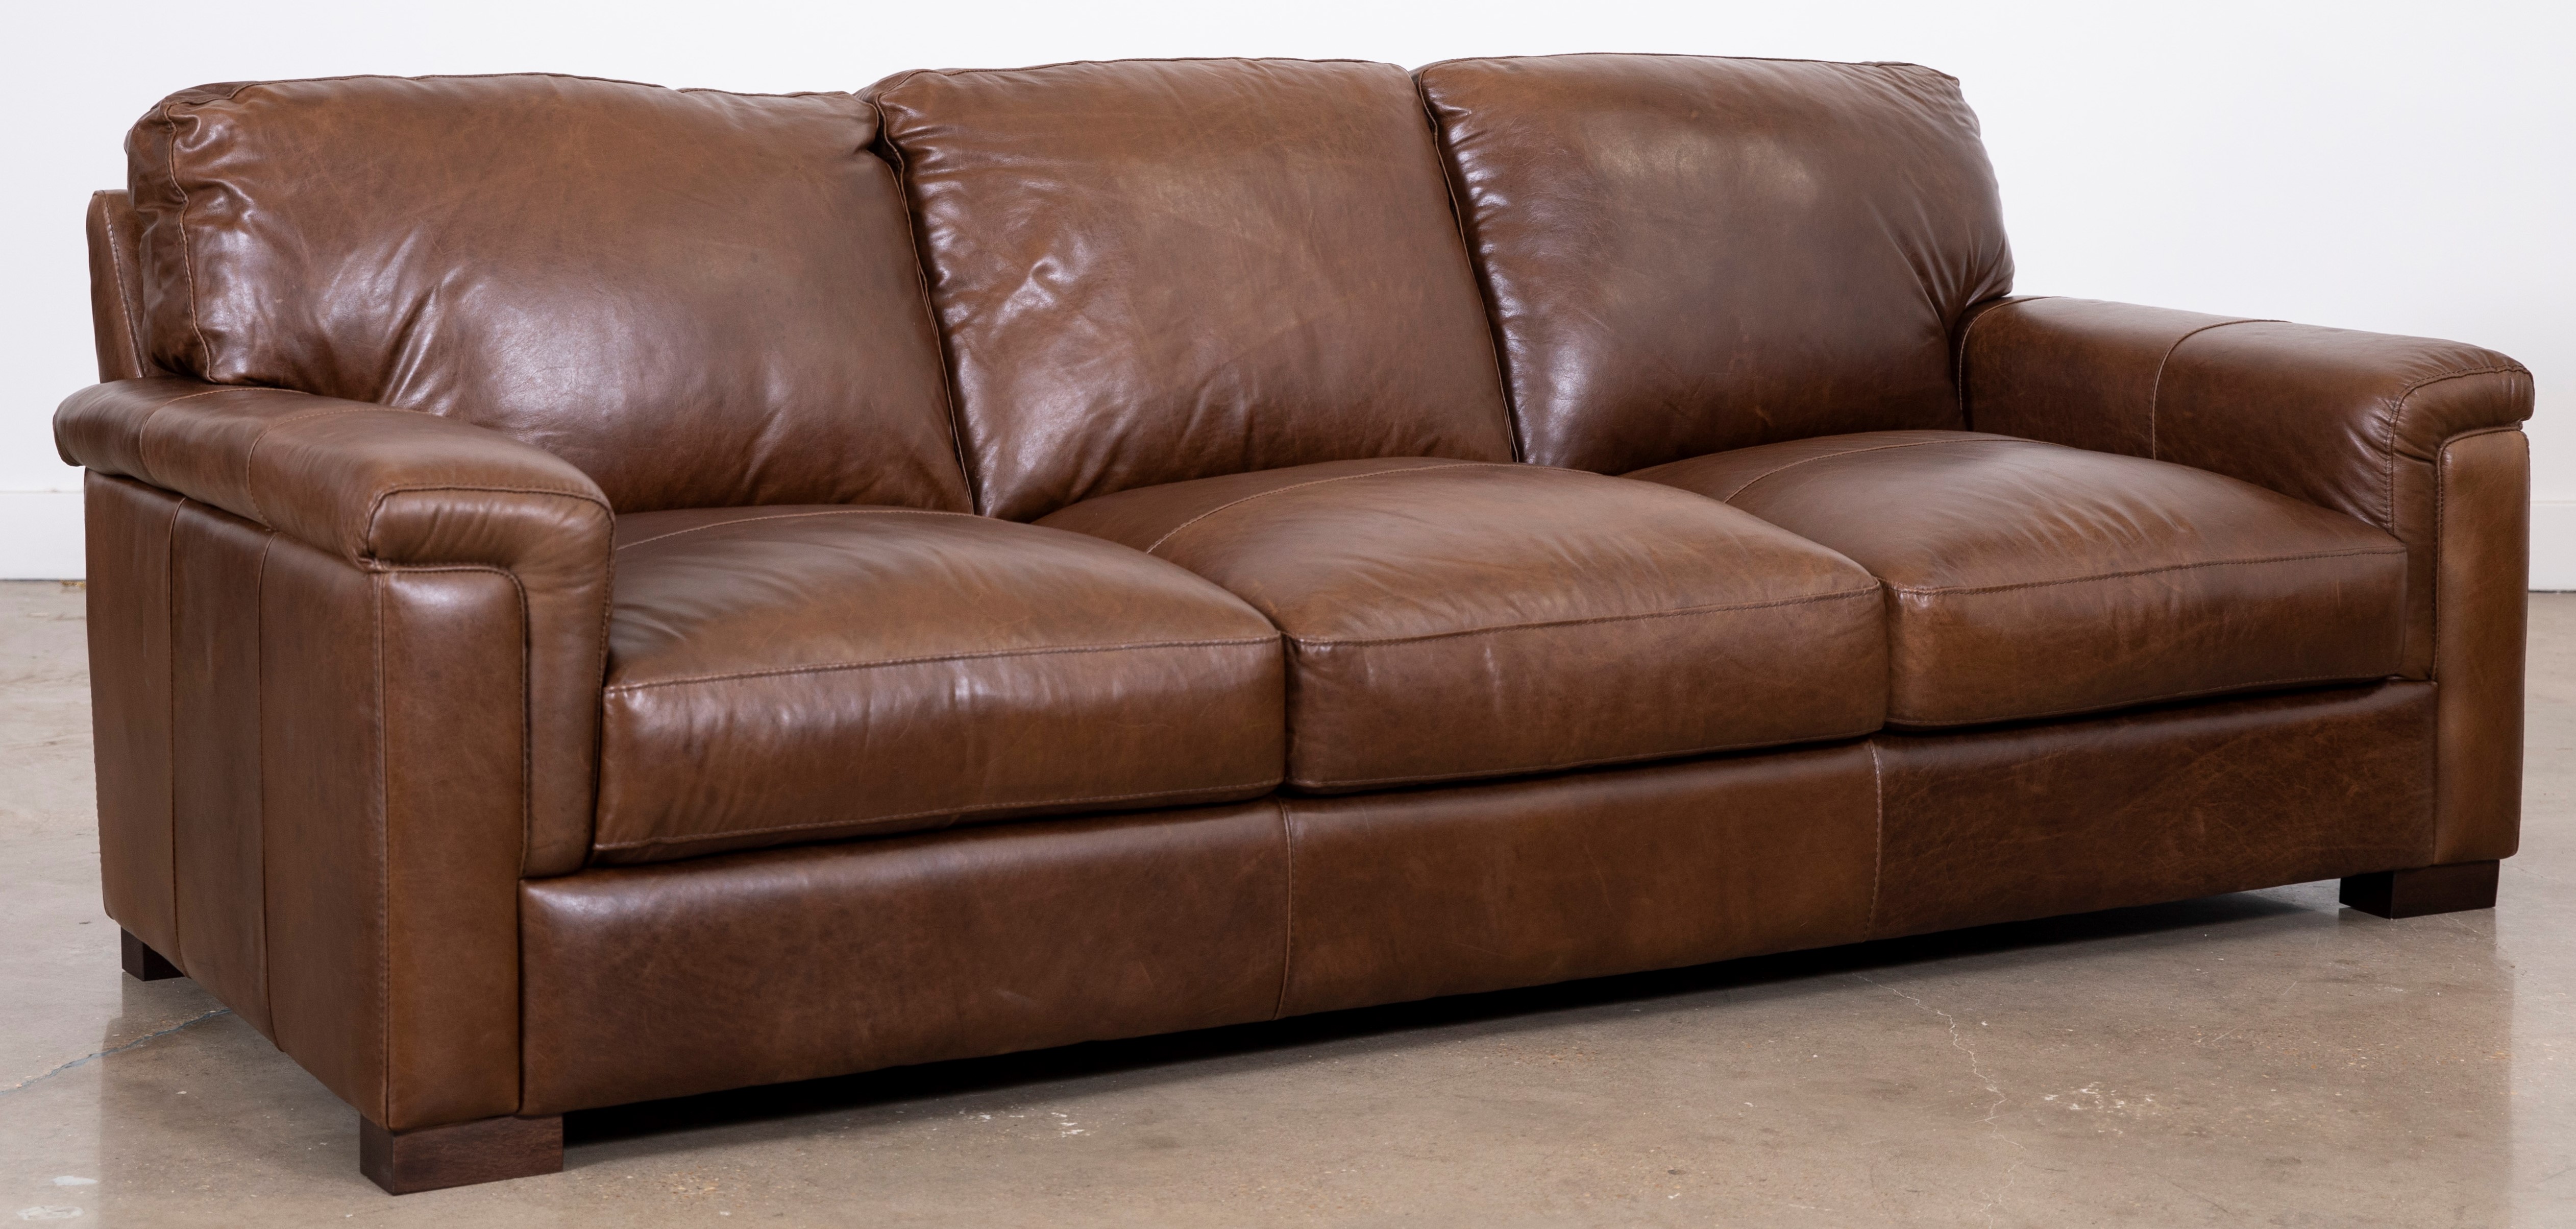 softline leather sofa reviews